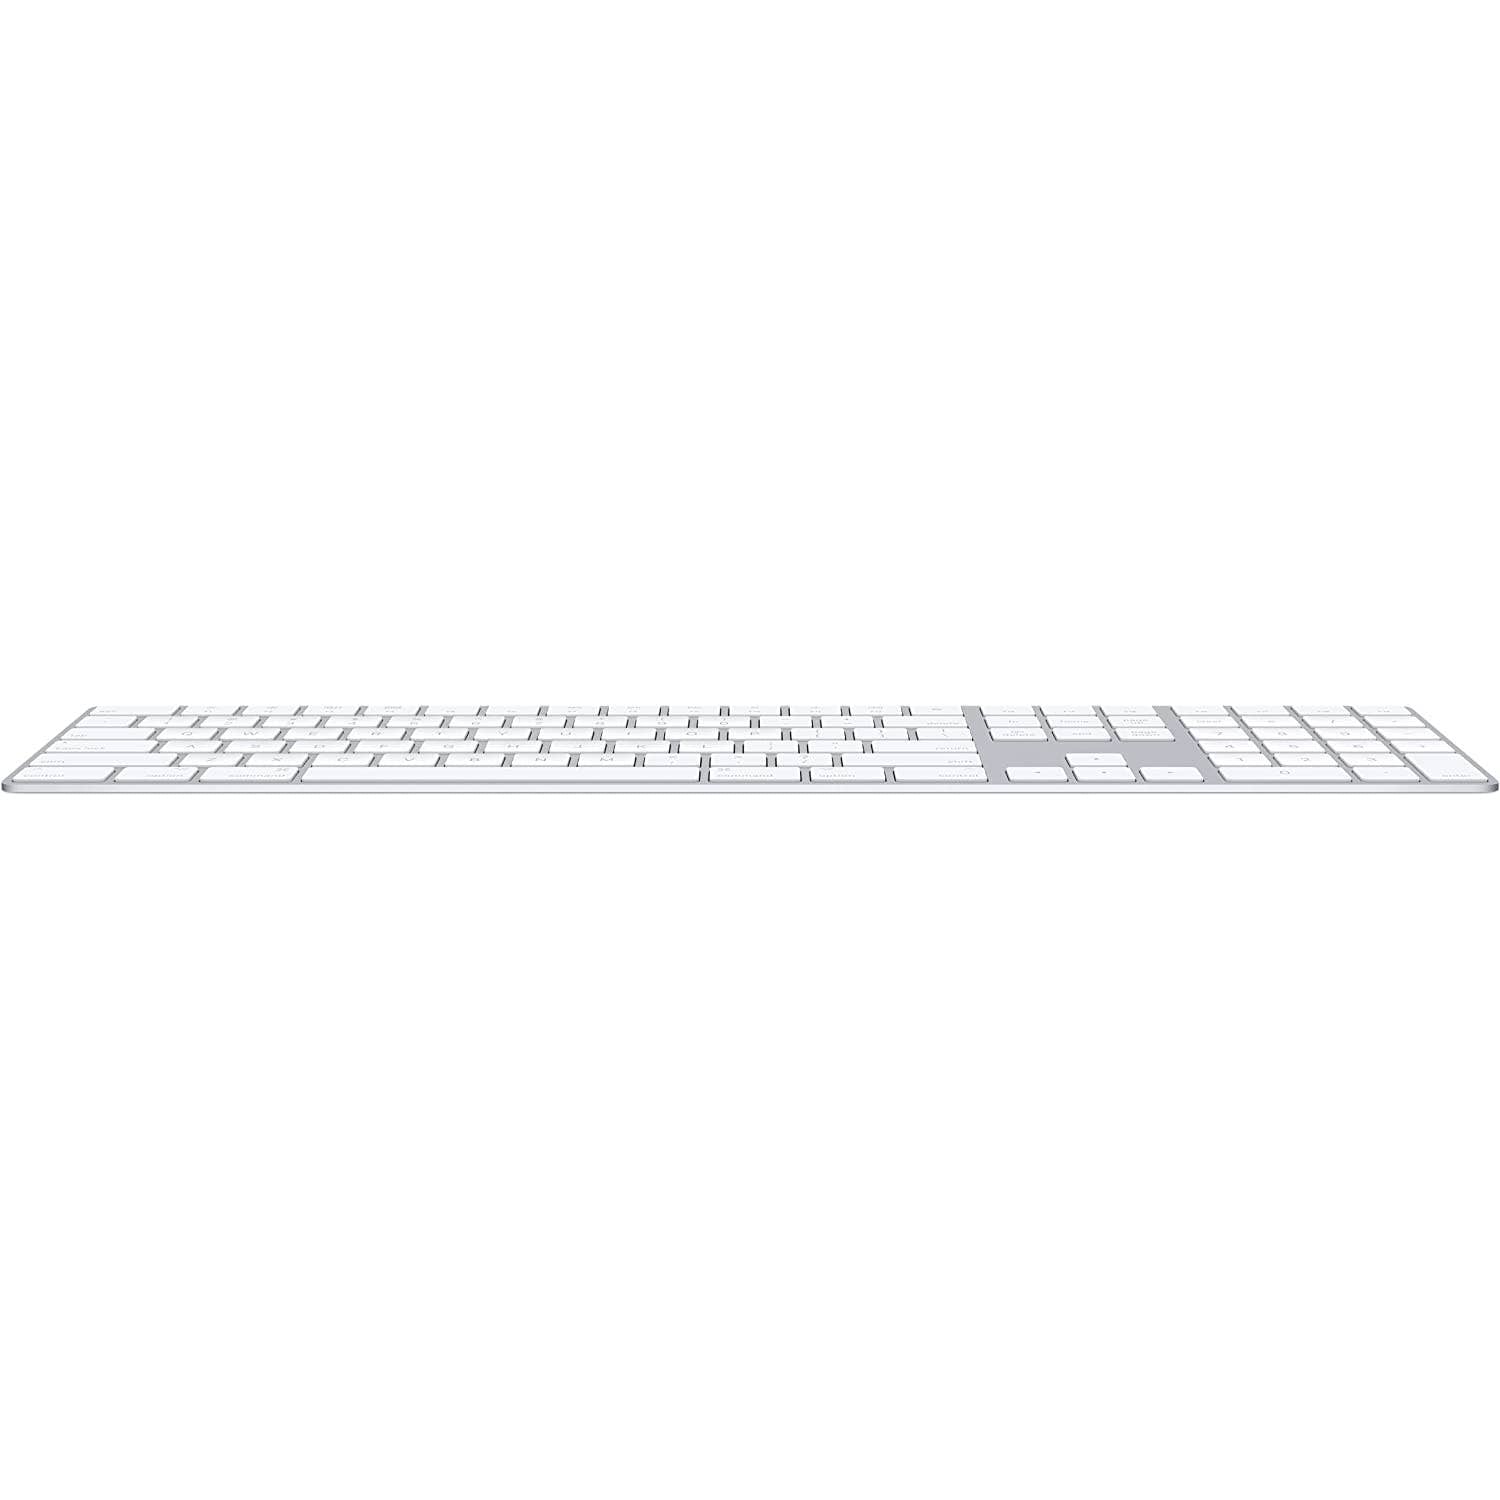 Apple - MQ052LL/A Full-size Wireless Scissor Magic Keyboard with Numeric Keypad - Silver